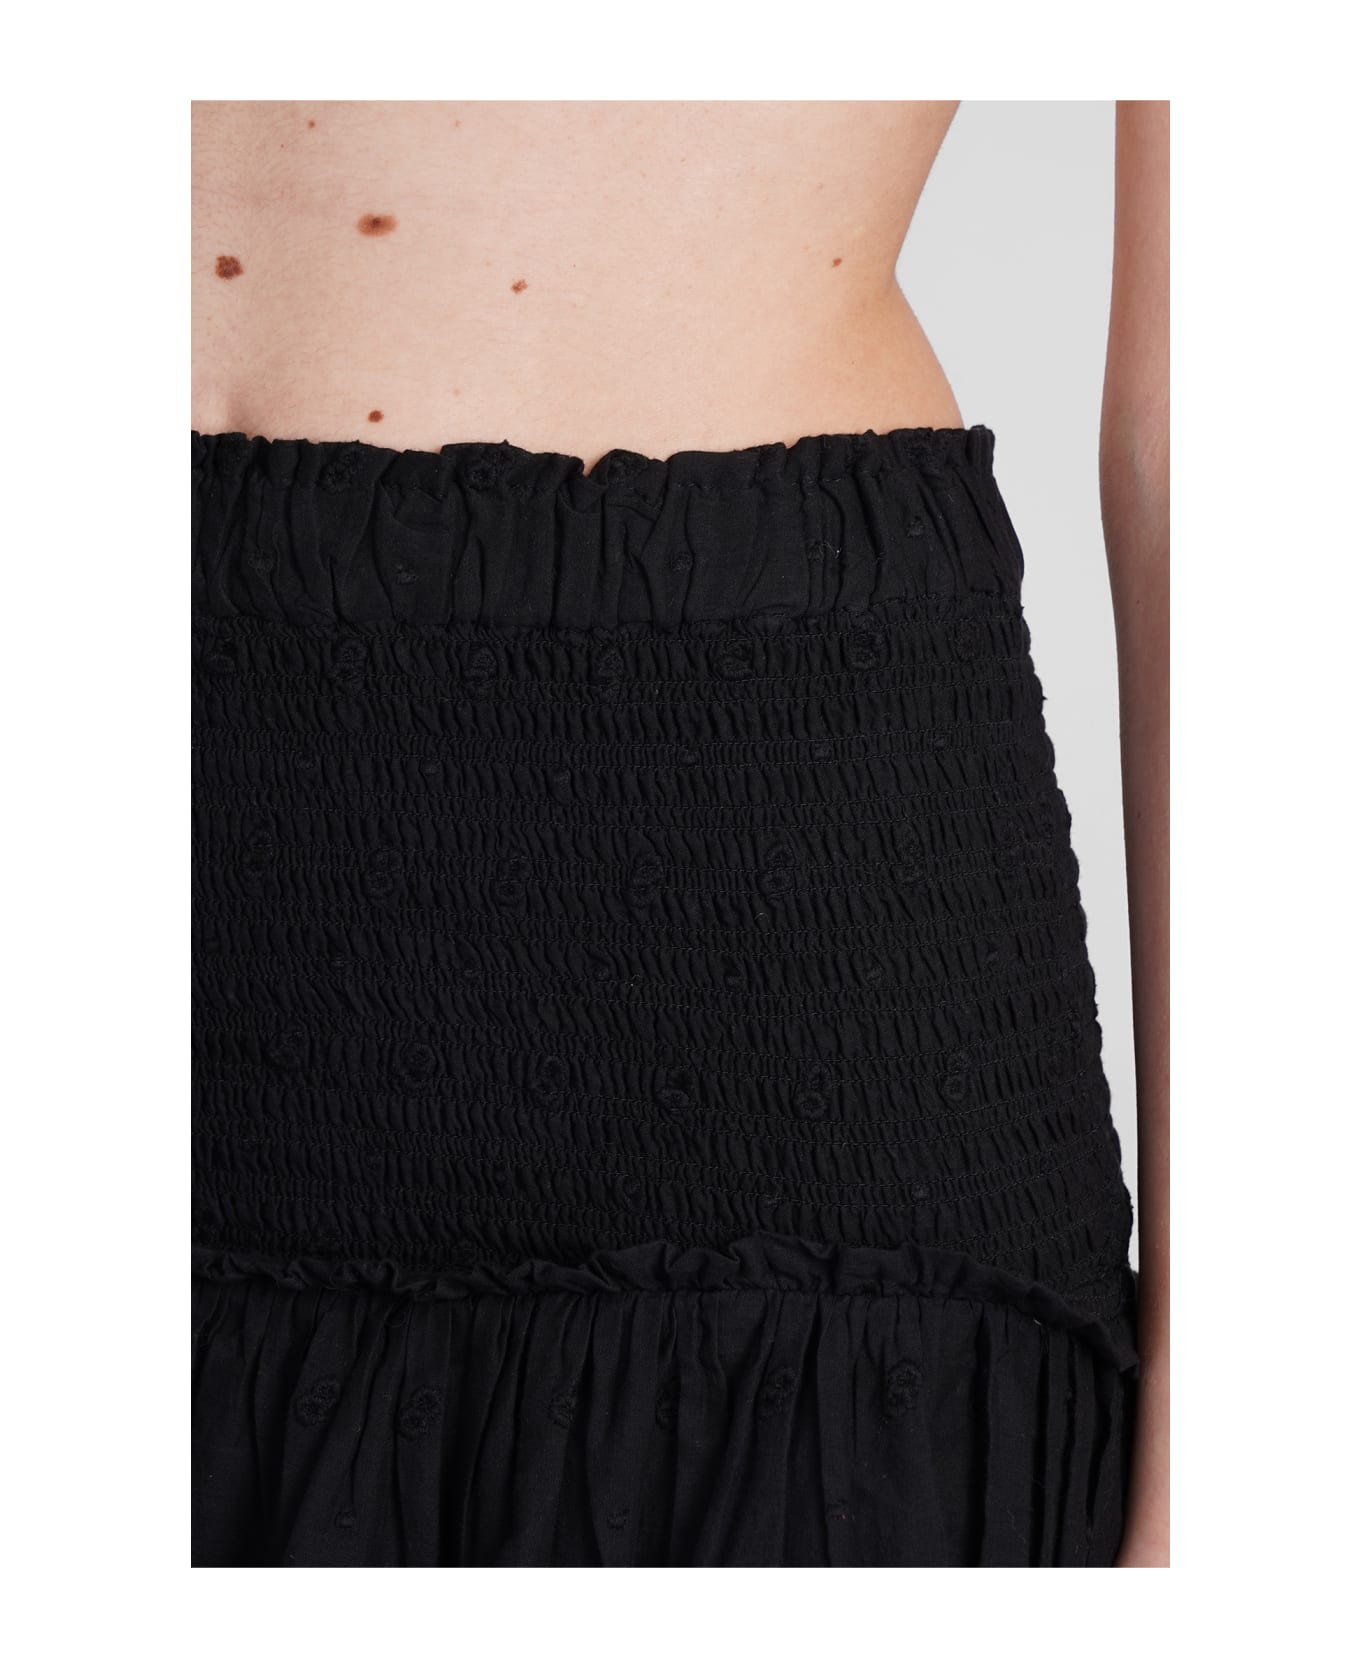 Marant Étoile Tinaomi Skirt - black